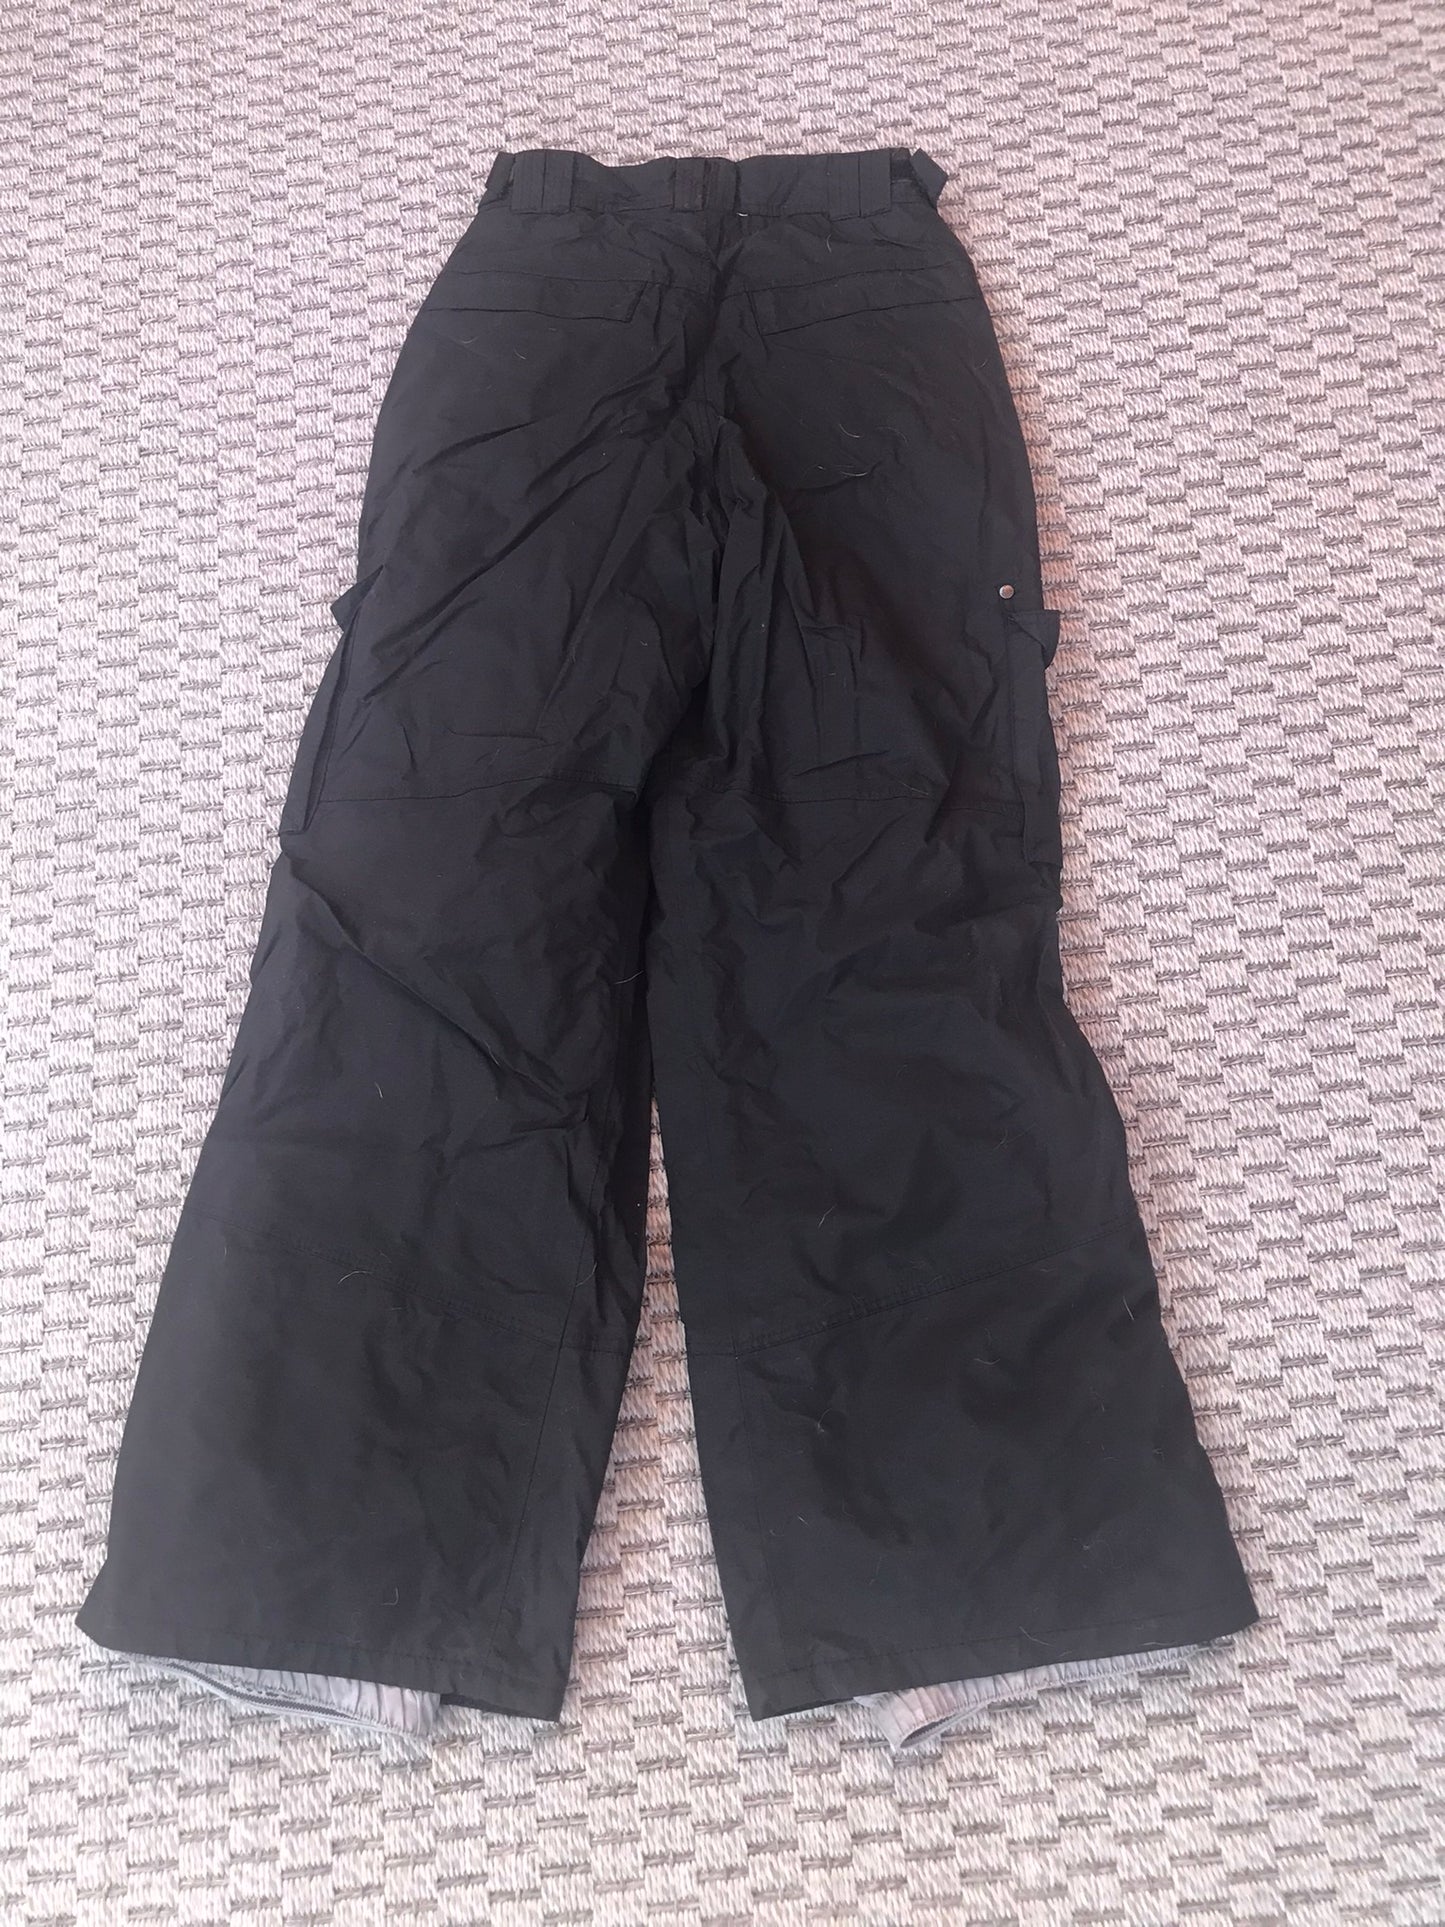 Snow Pants Child Size 16-18 Youth TressPass Black  Like New